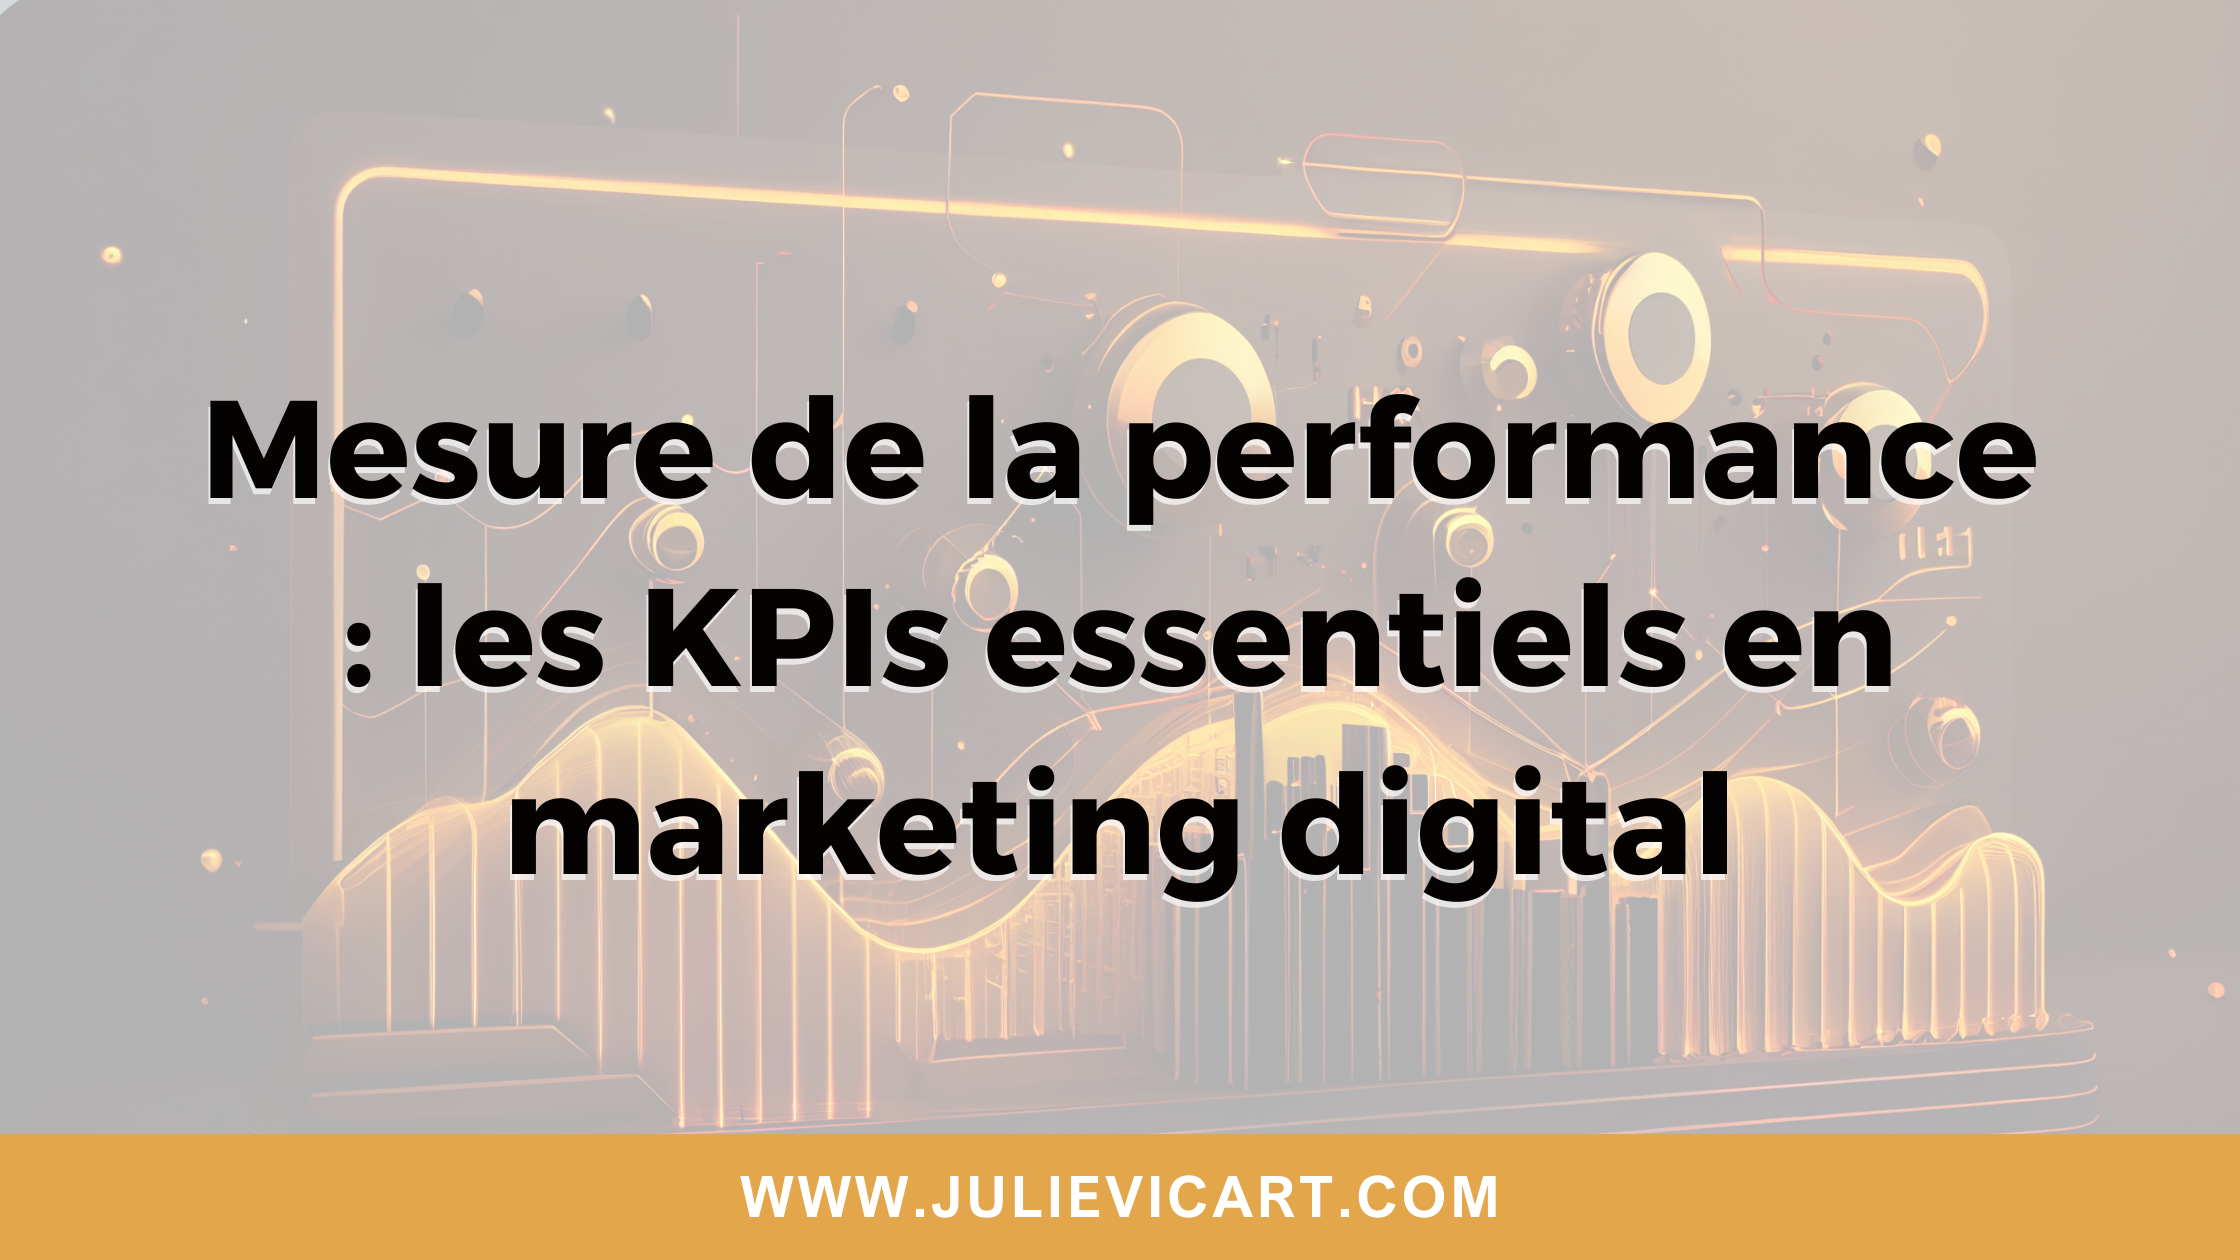 Mesure de la performance : les KPIs essentiels en marketing digital